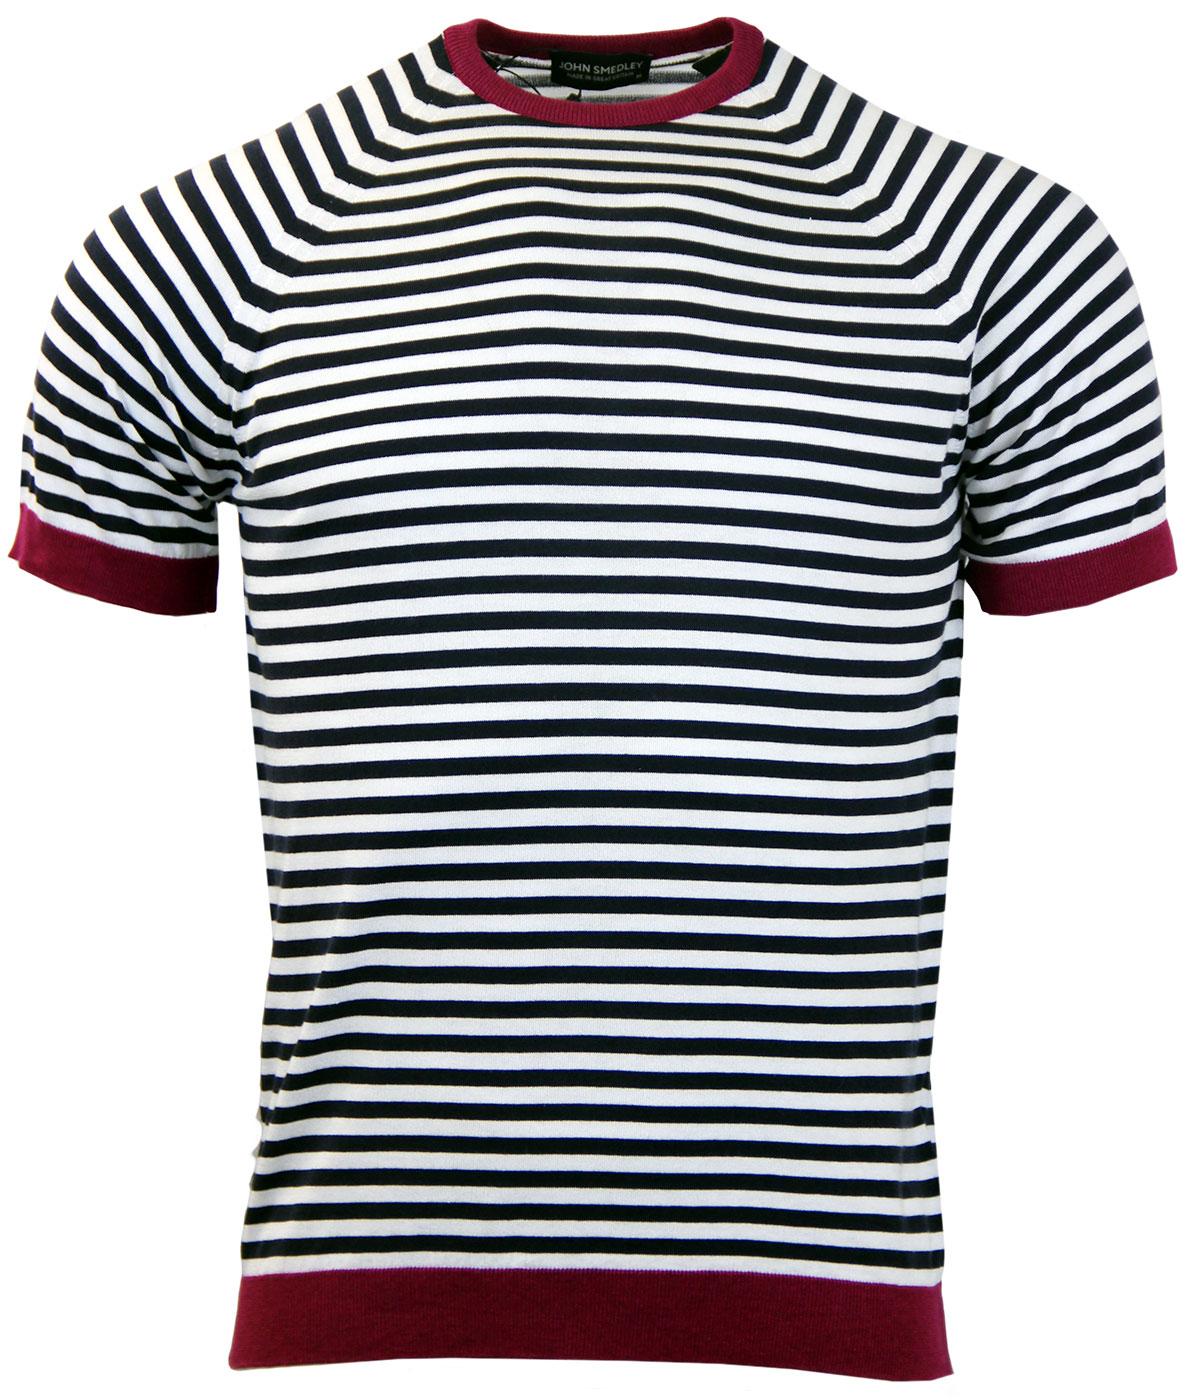 JOHN SMEDLEY Eddy Retro 60s Mod Striped Knit T-Shirt Raspberry